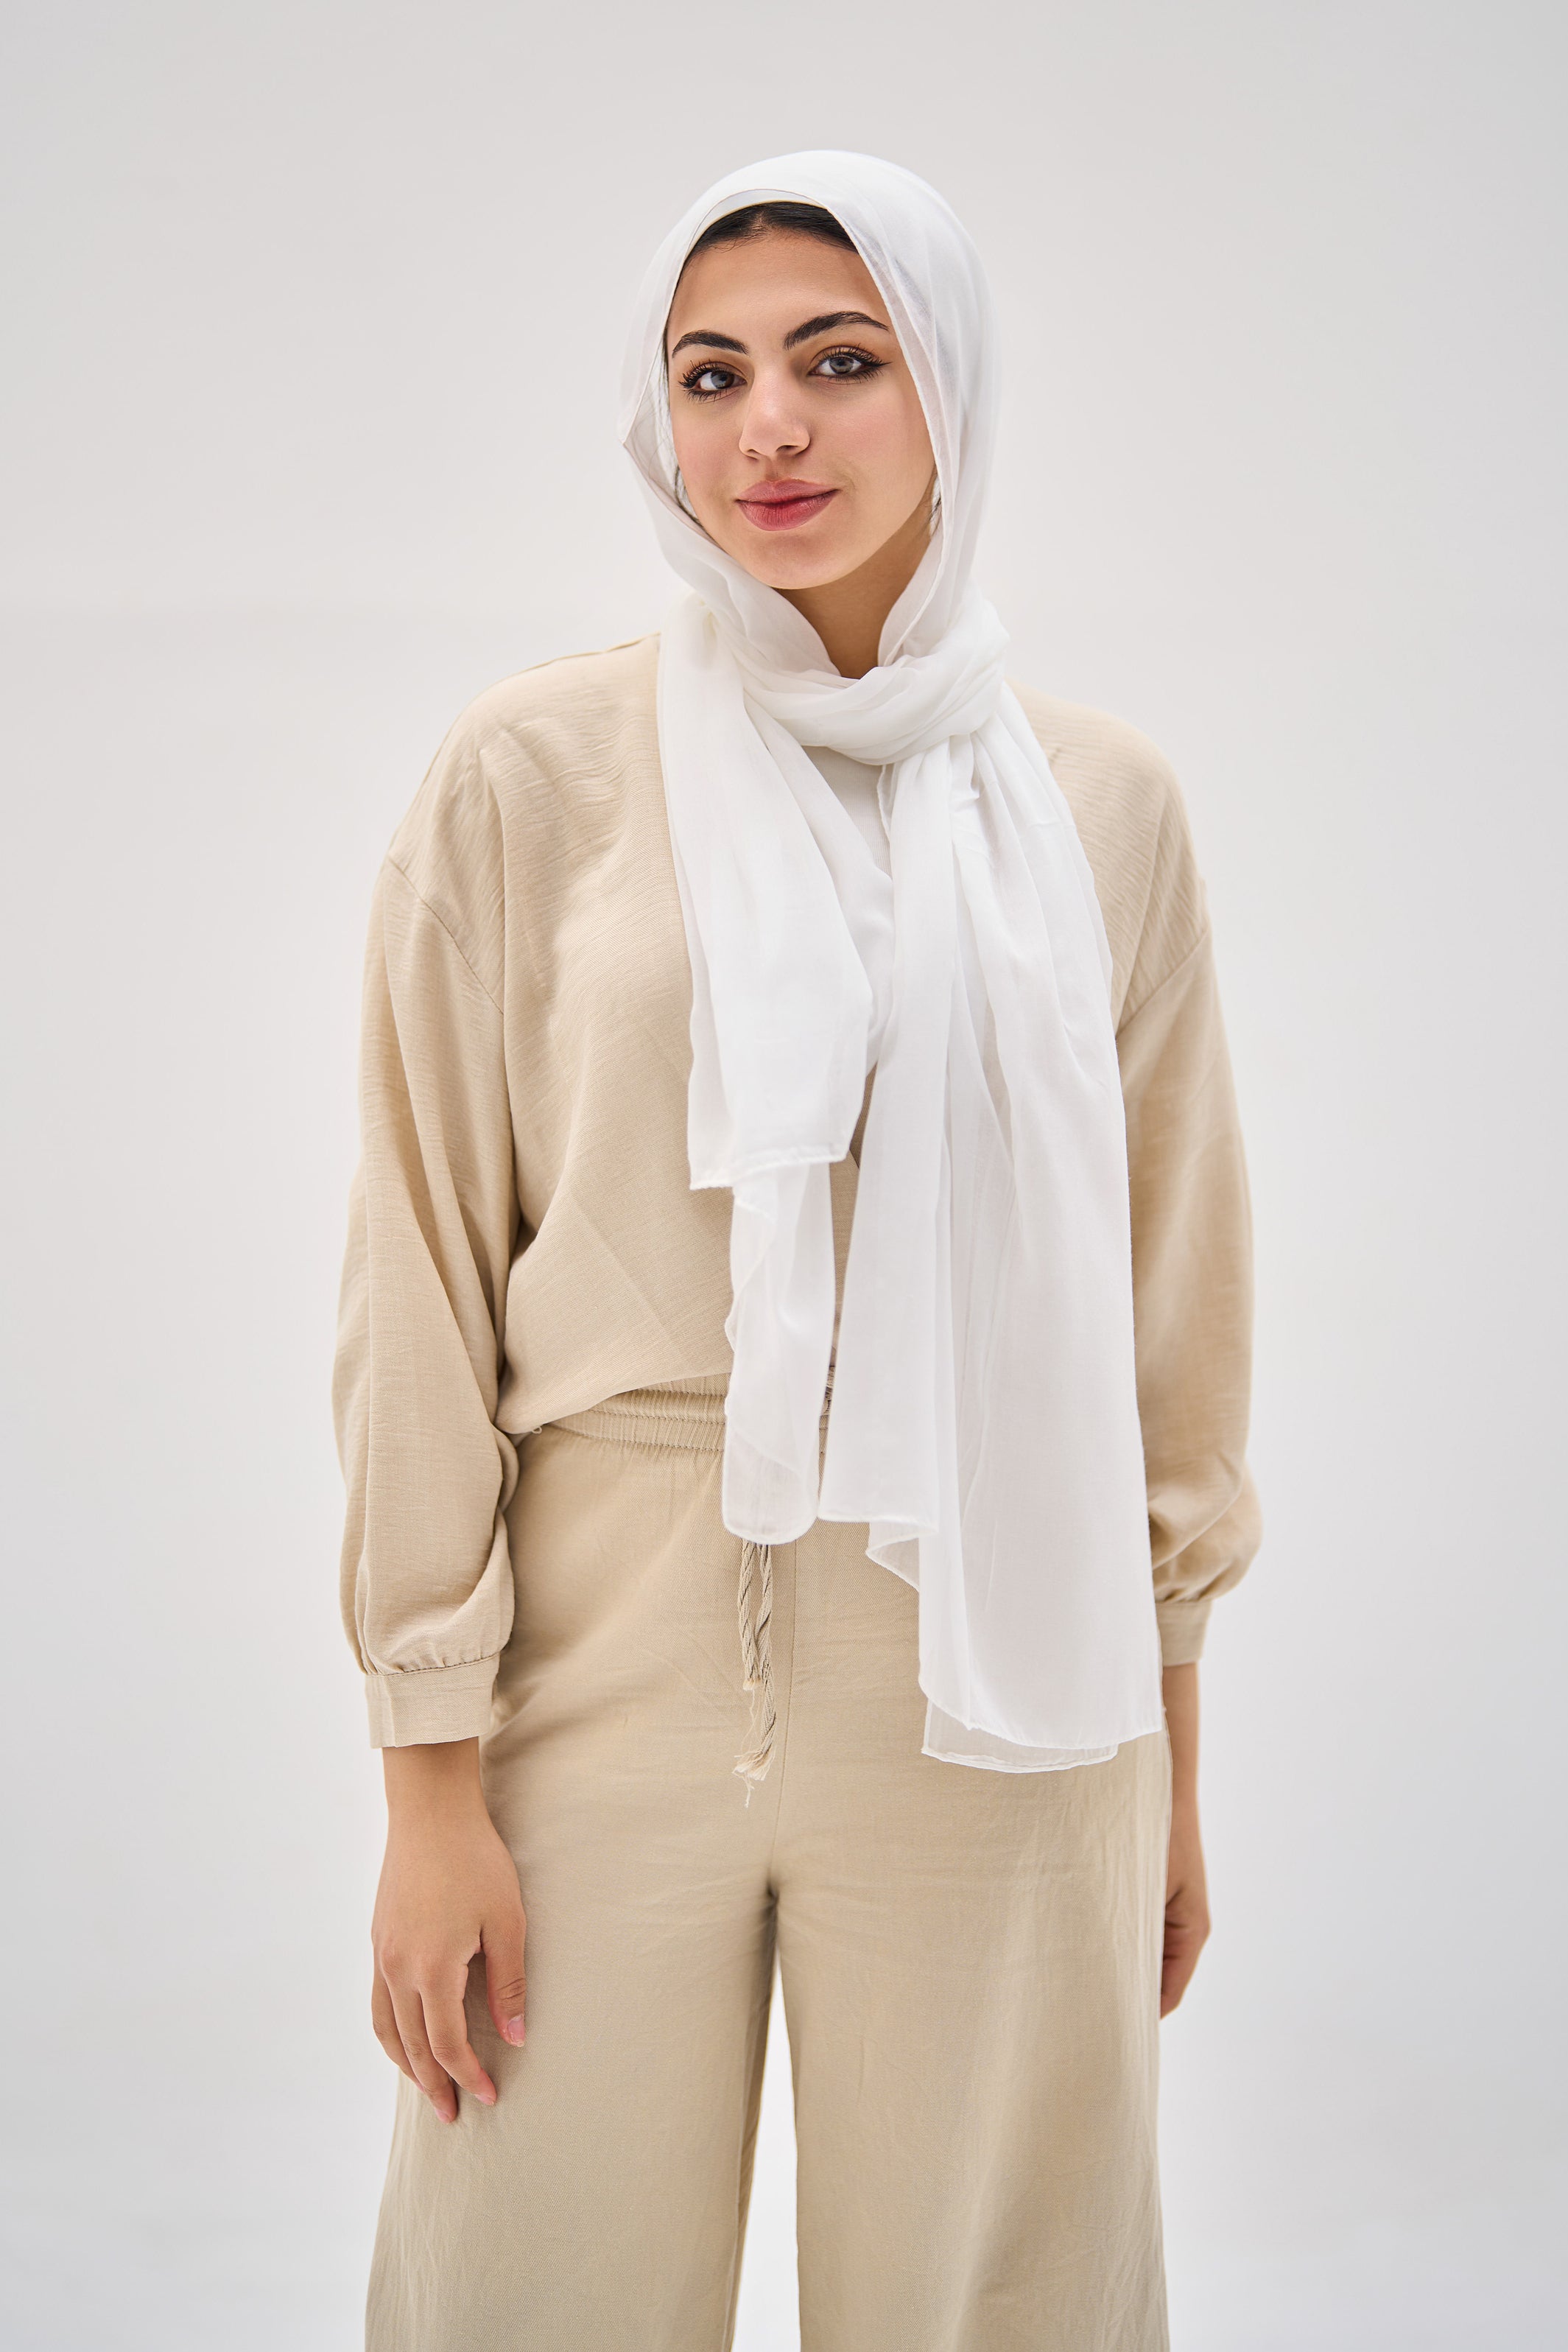 WHITE Elegance Hijab